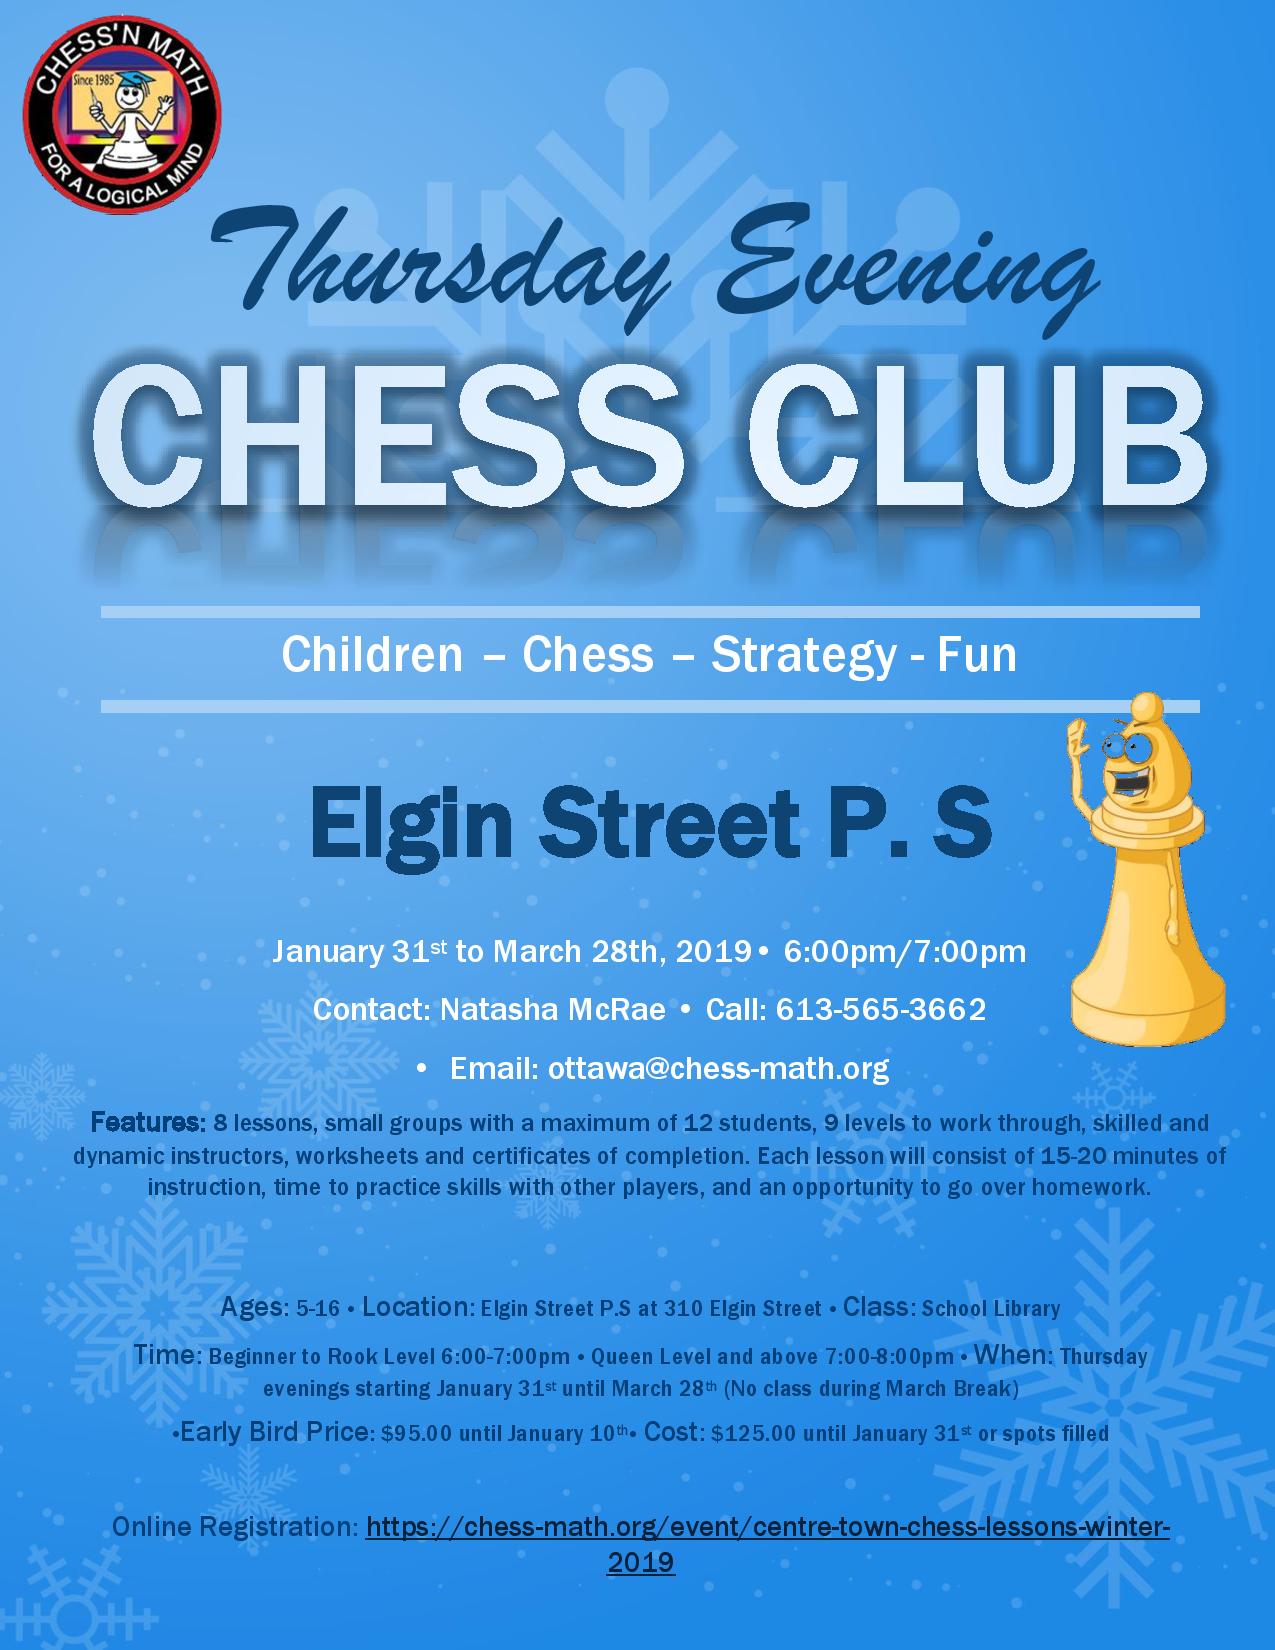 Centretown Chess Club Winter 2019 Elgin Street